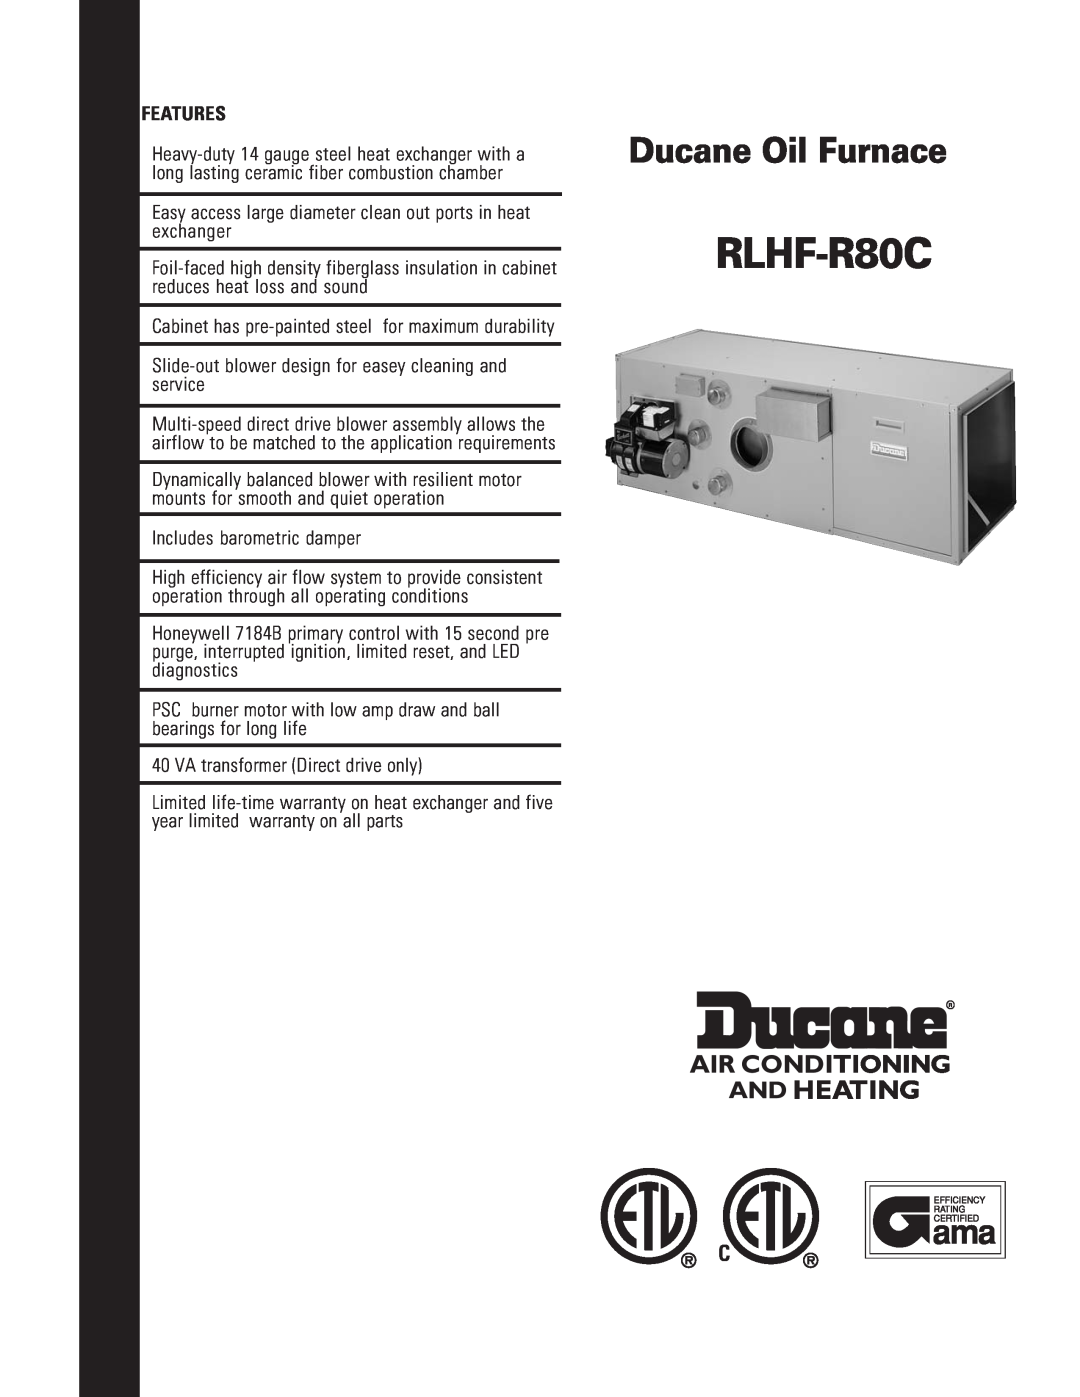 Ducane (HVAC) RLHF-R80C warranty Ducane Oil Furnace, Features 